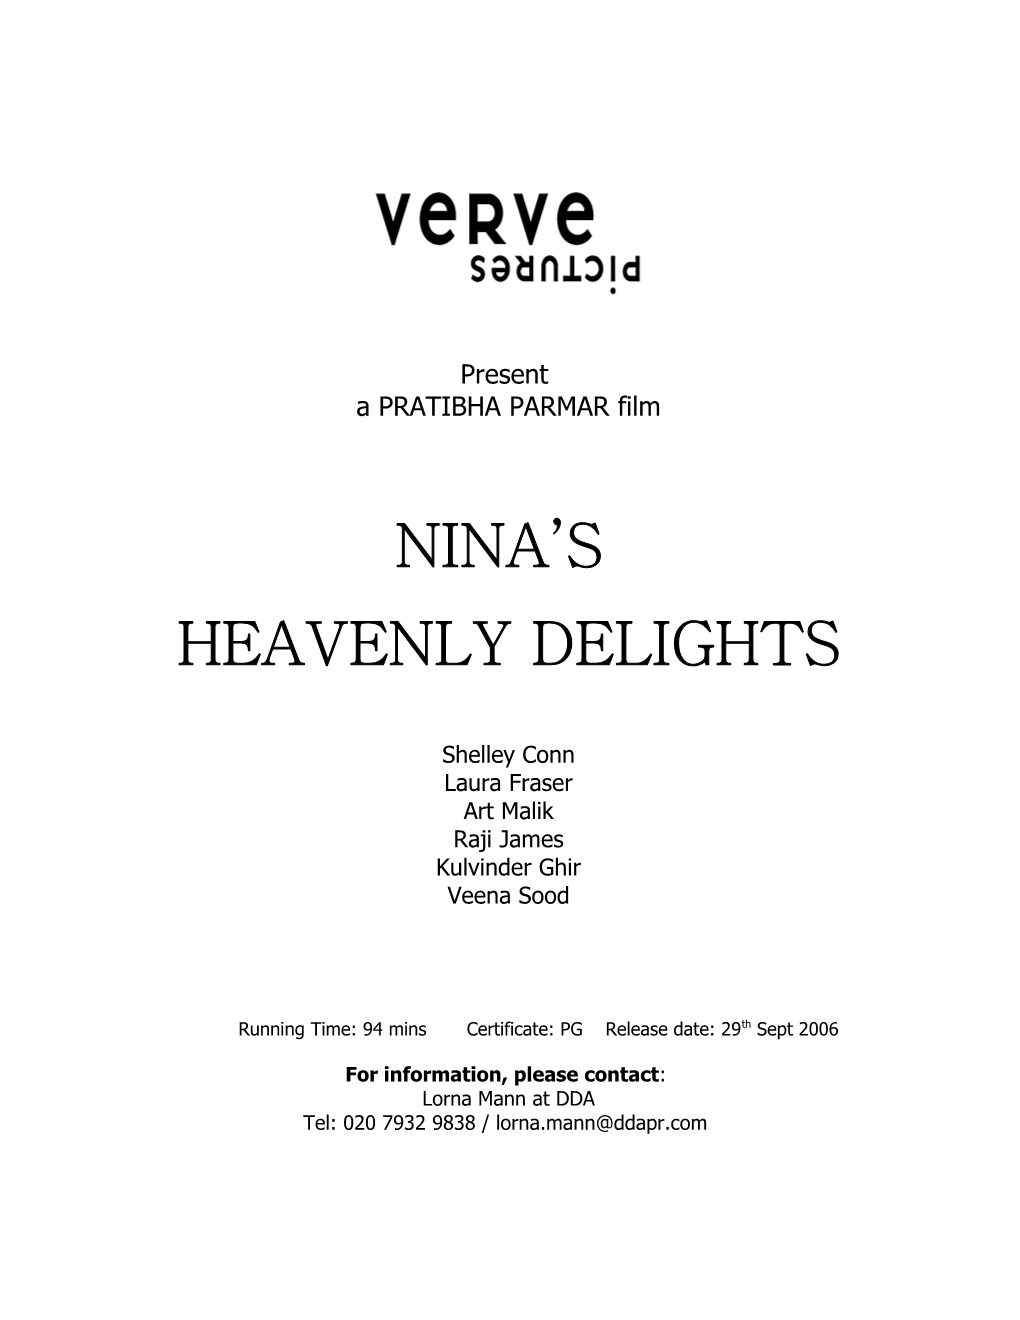 Nina S Heavenly Delights